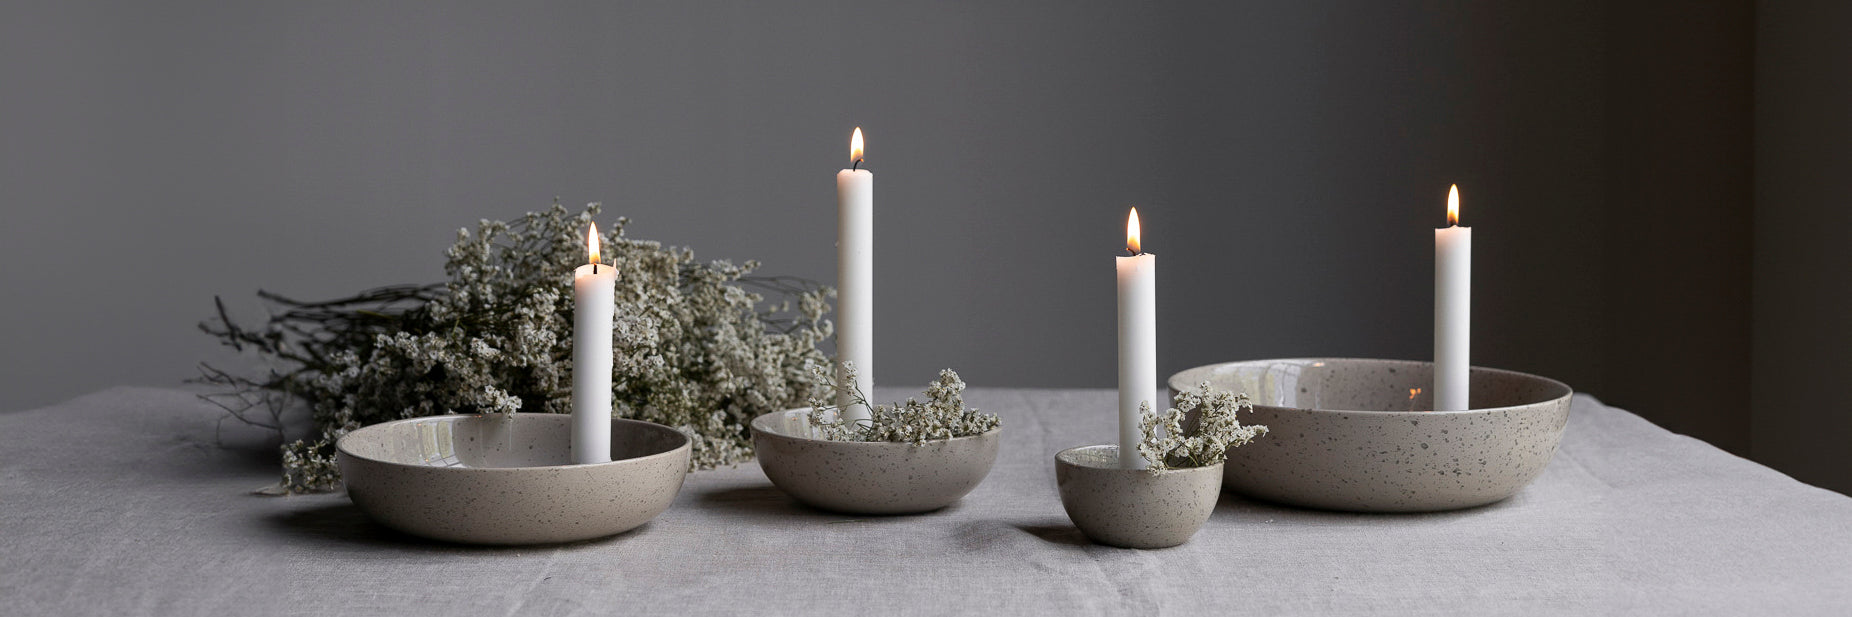 Kerzenhalter im skandinavischen Stil gefertigt aus / Holz Keramik